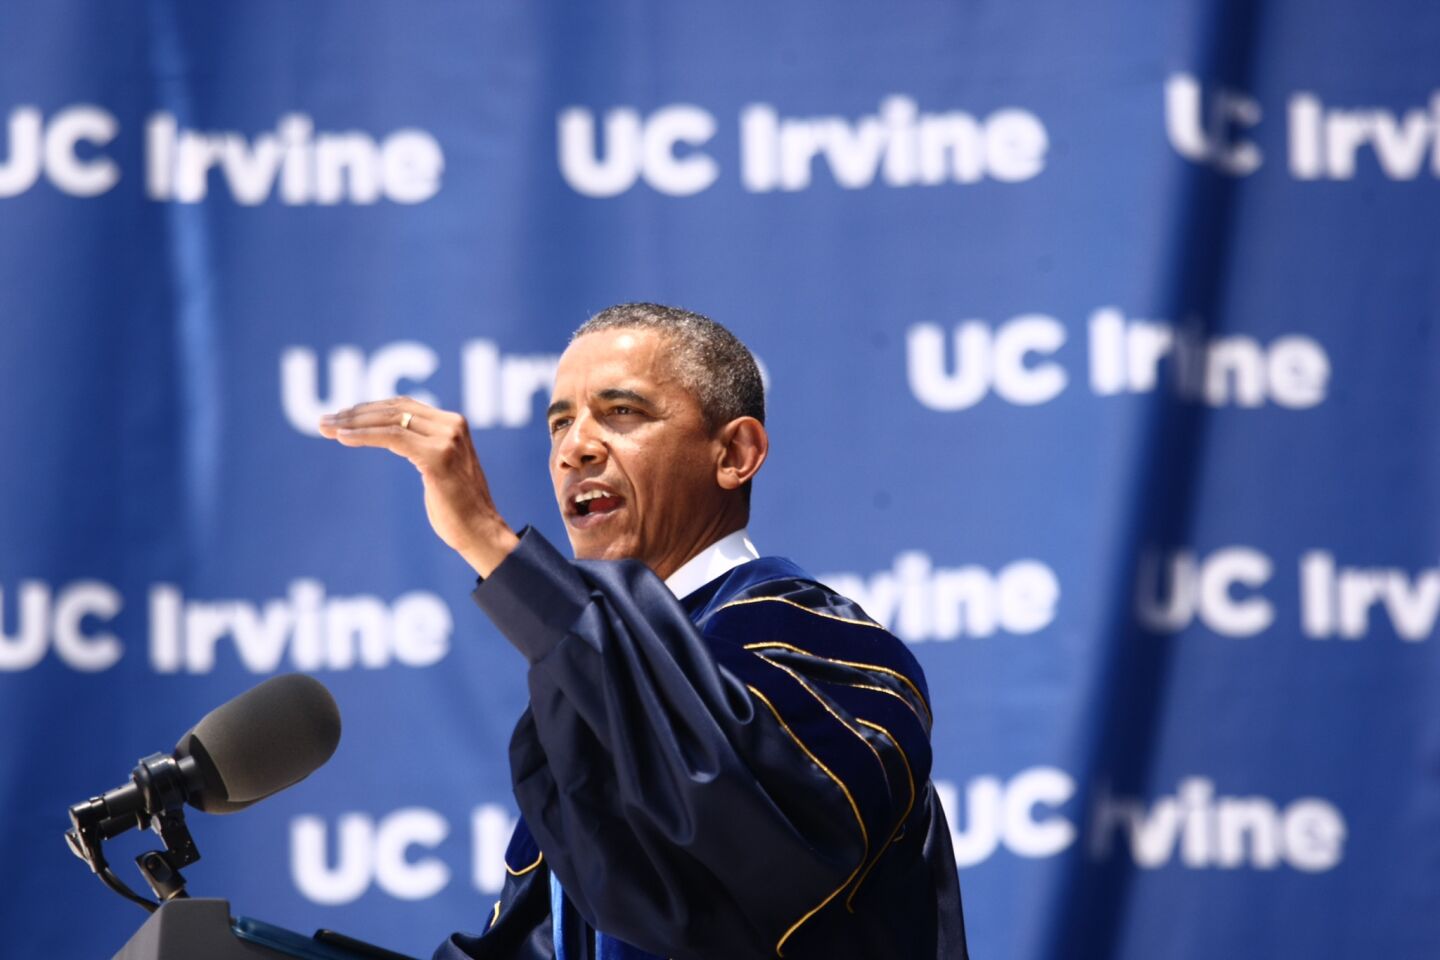 UC Irvine graduation